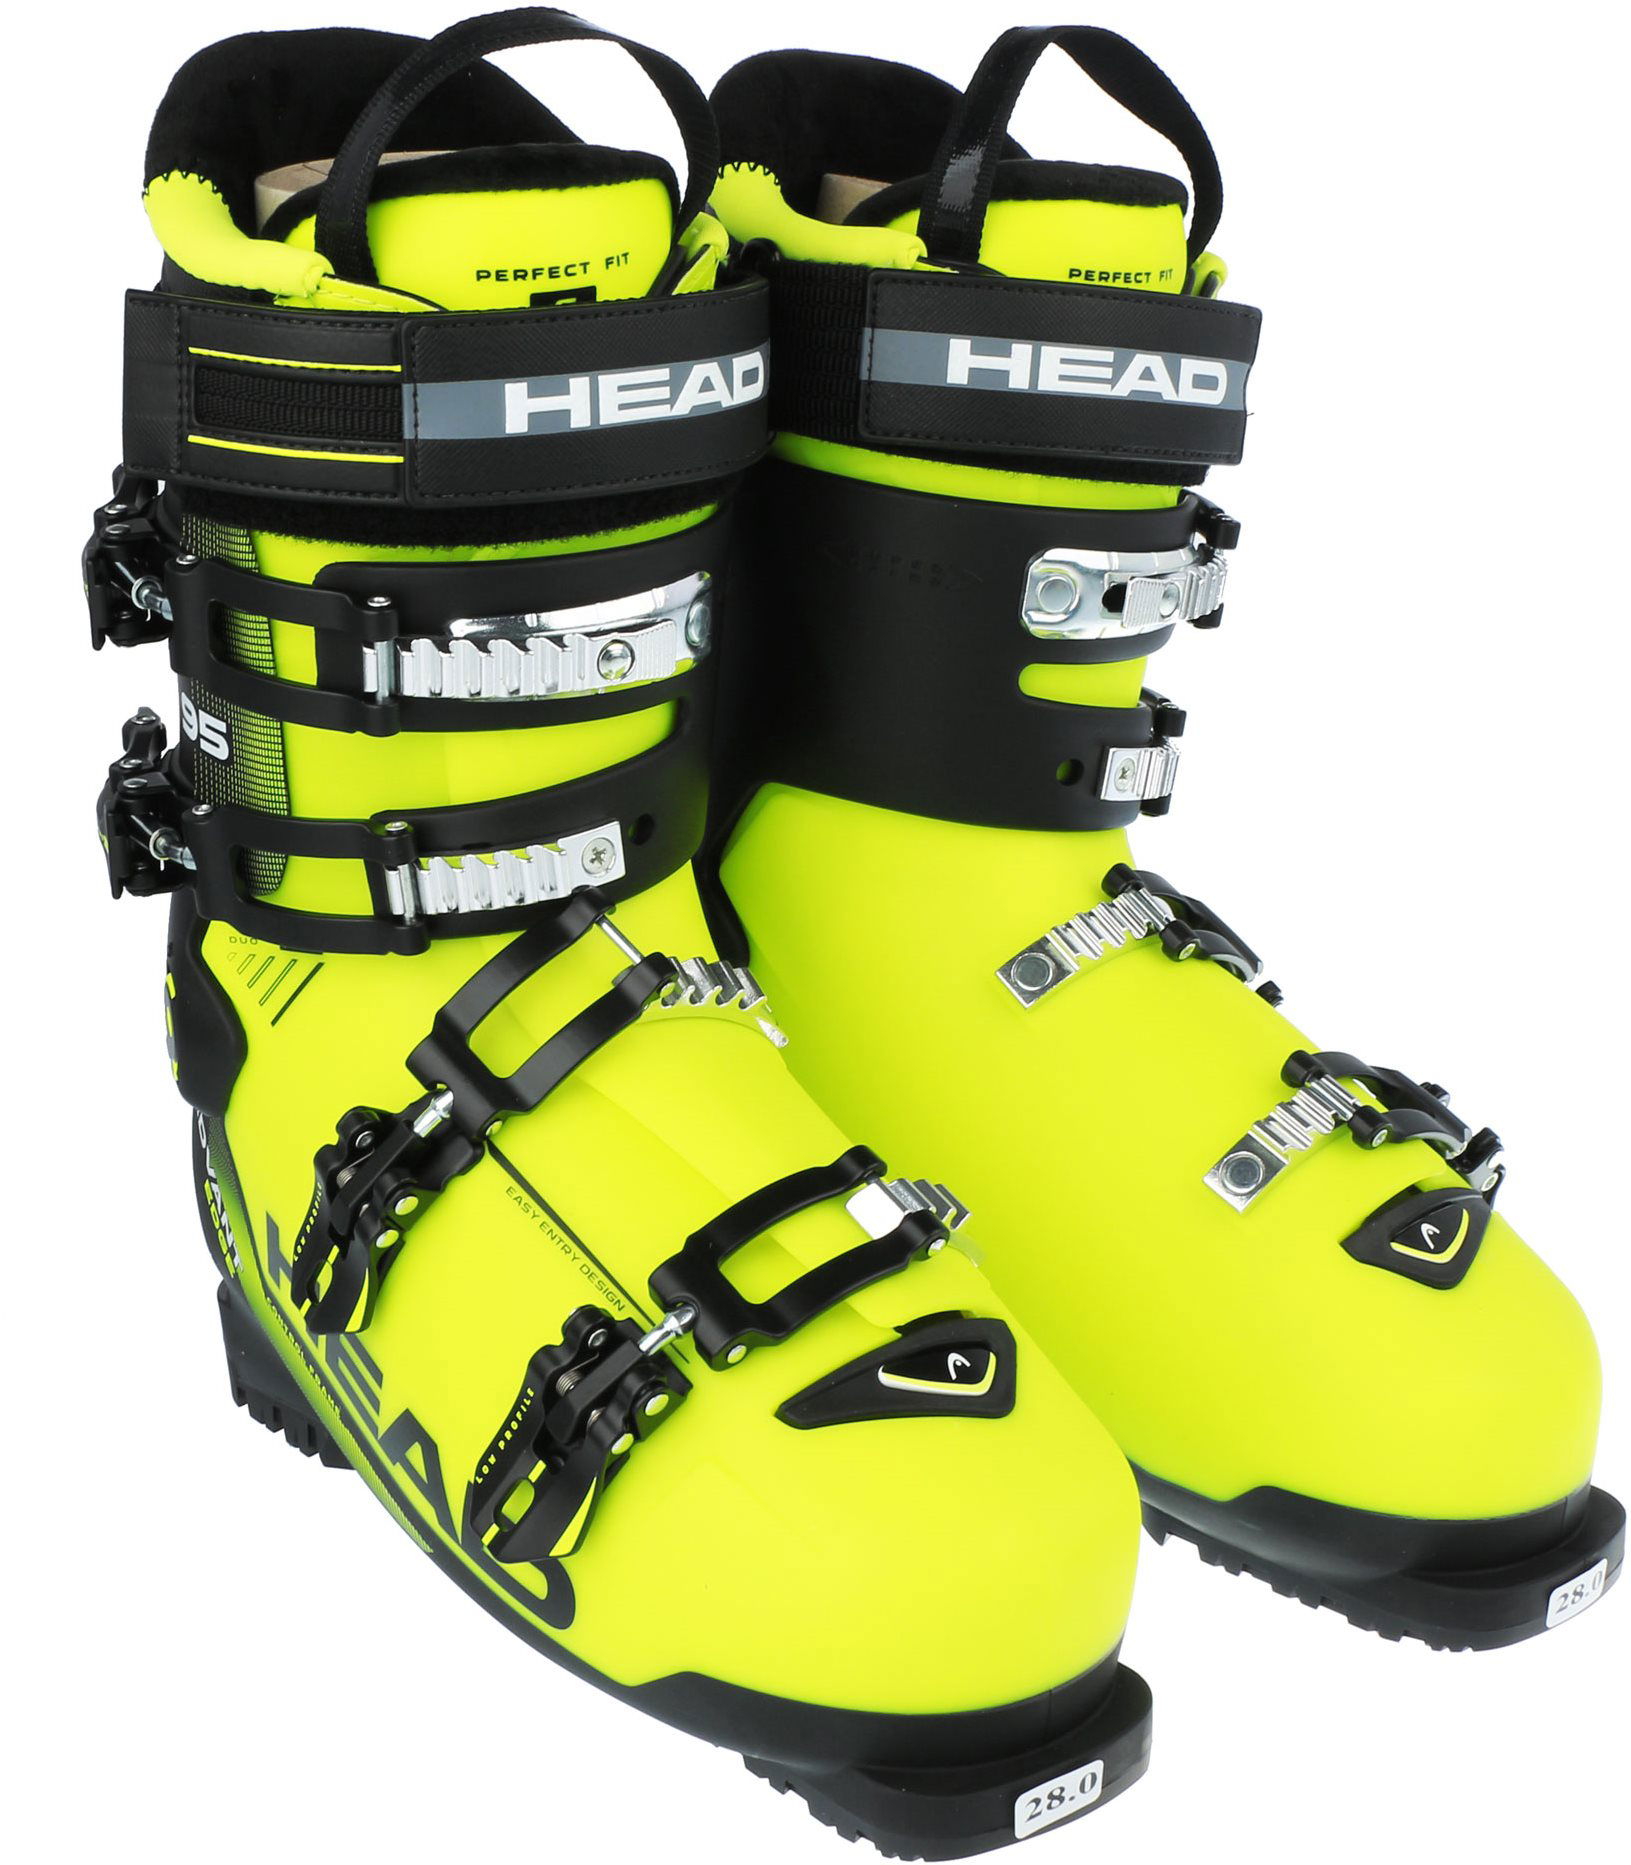 Head Advant Edge 95 size 43 EU / 280 mm - Ski Boots | alza.sk